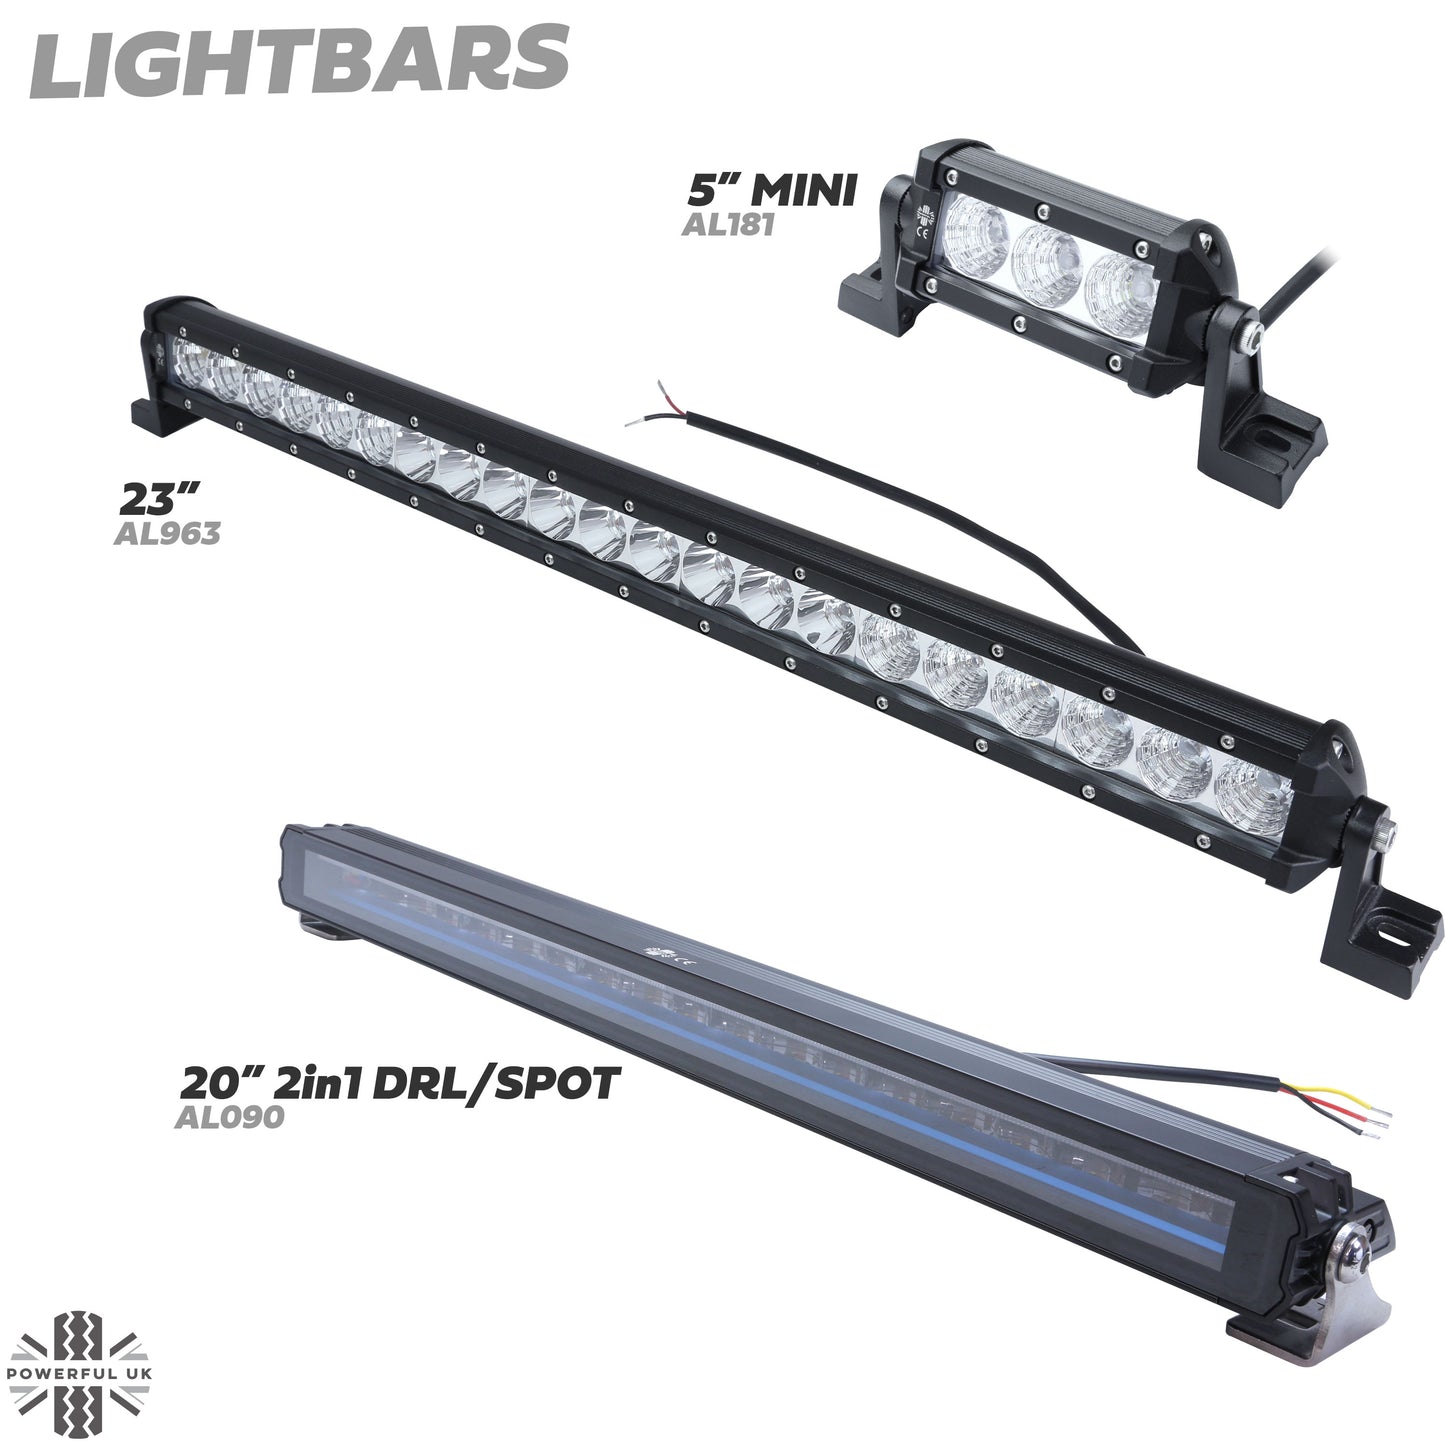 23" LED Light Bar